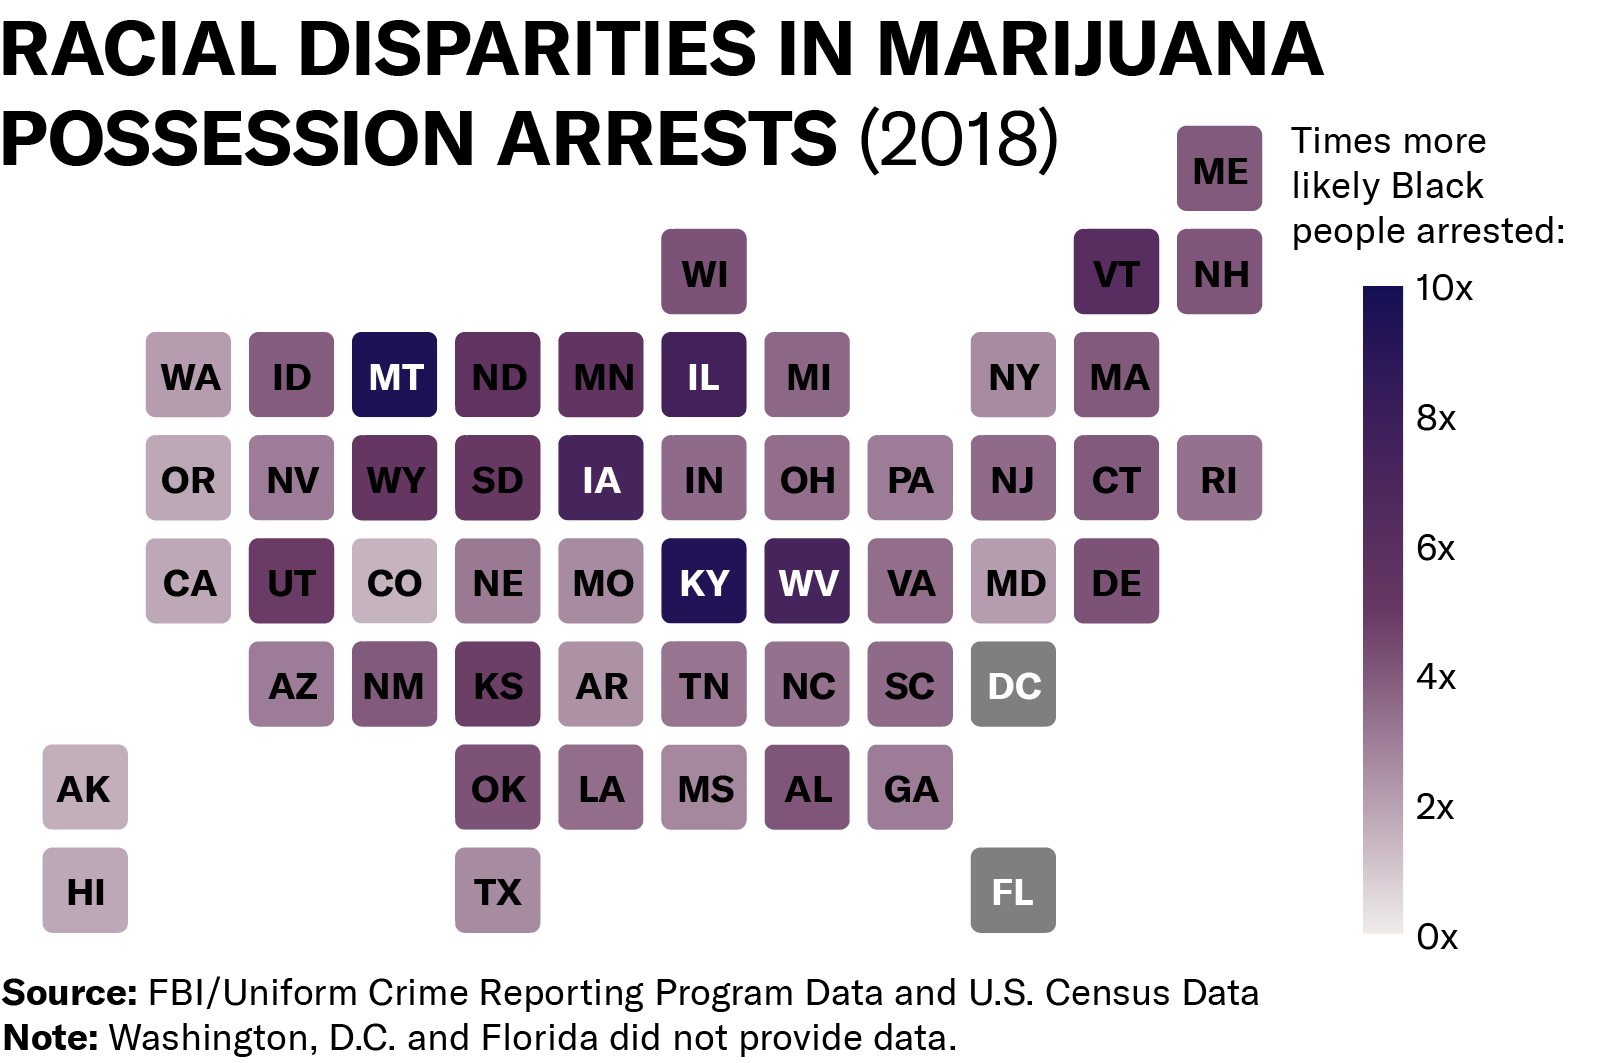 Map of racial disparities in marijuana possession arrests in 2018